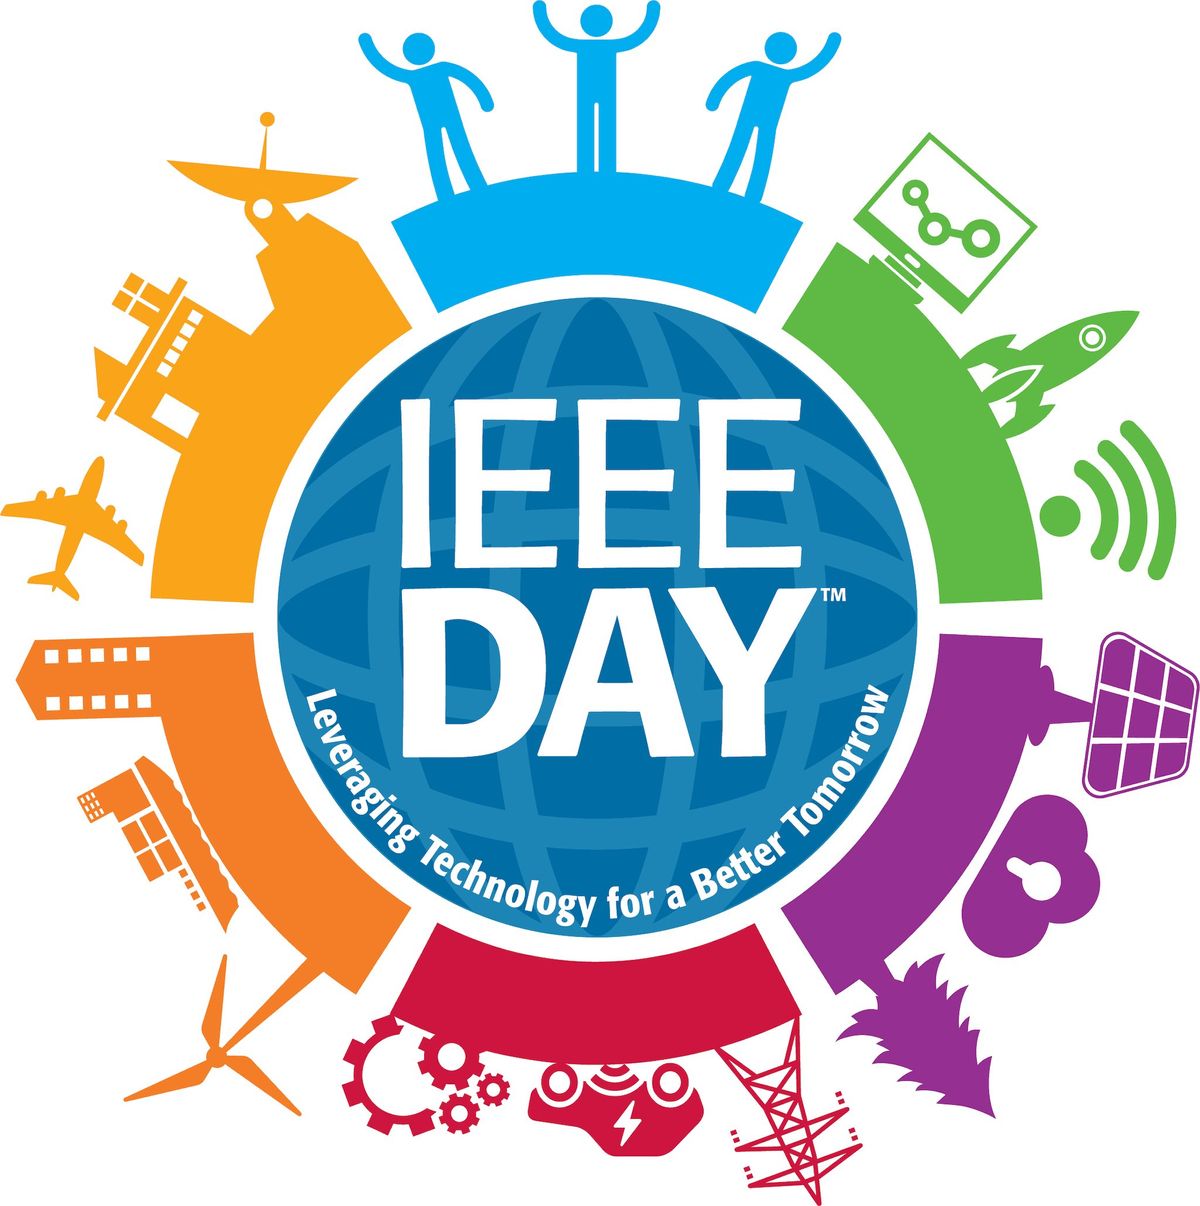 IEEE Day logo